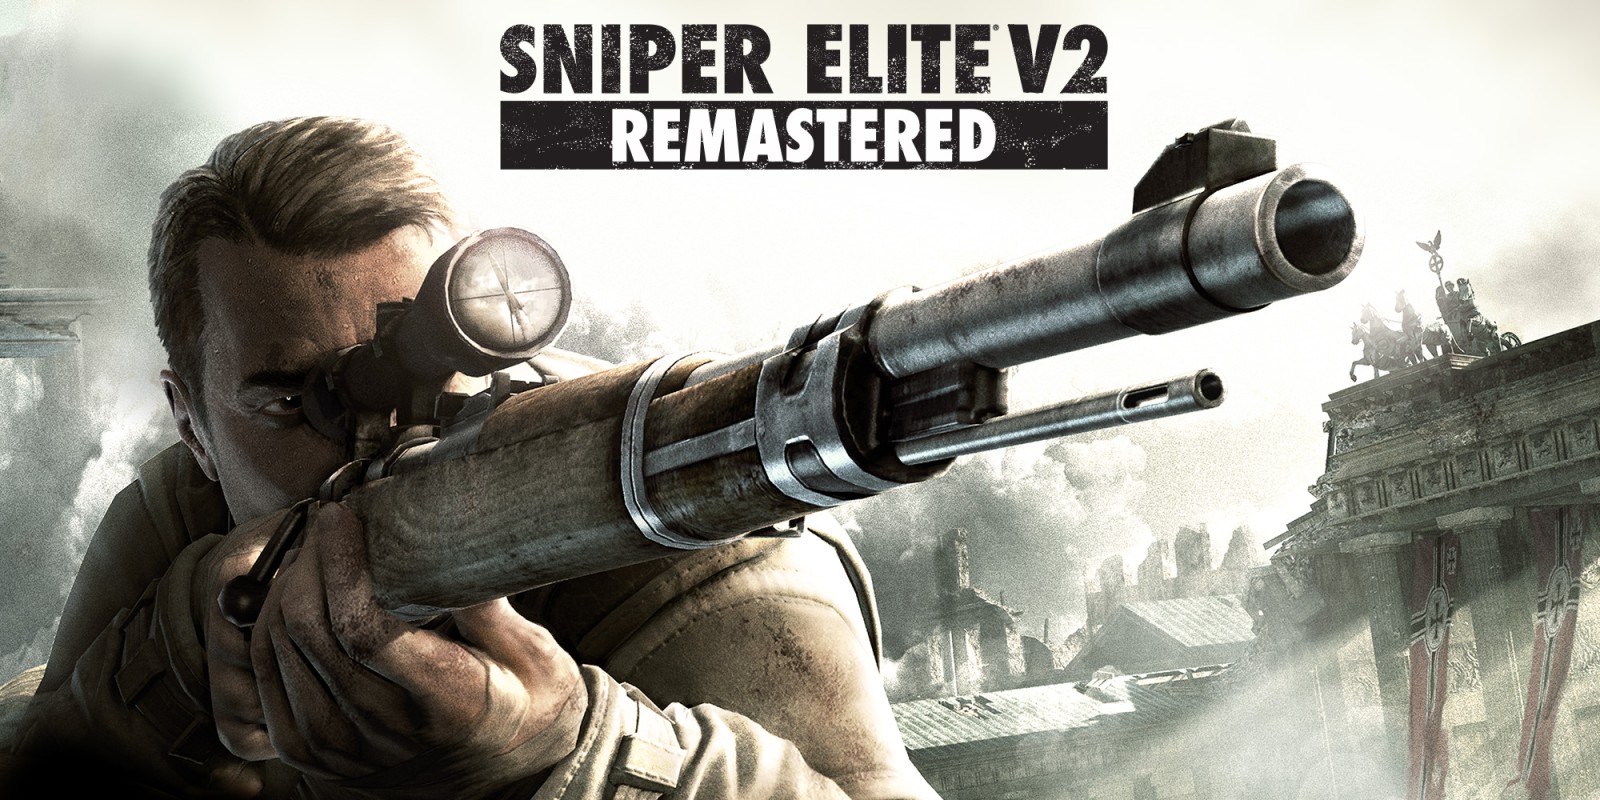 NEWS – Sniper Elite V2 Remastered trailer